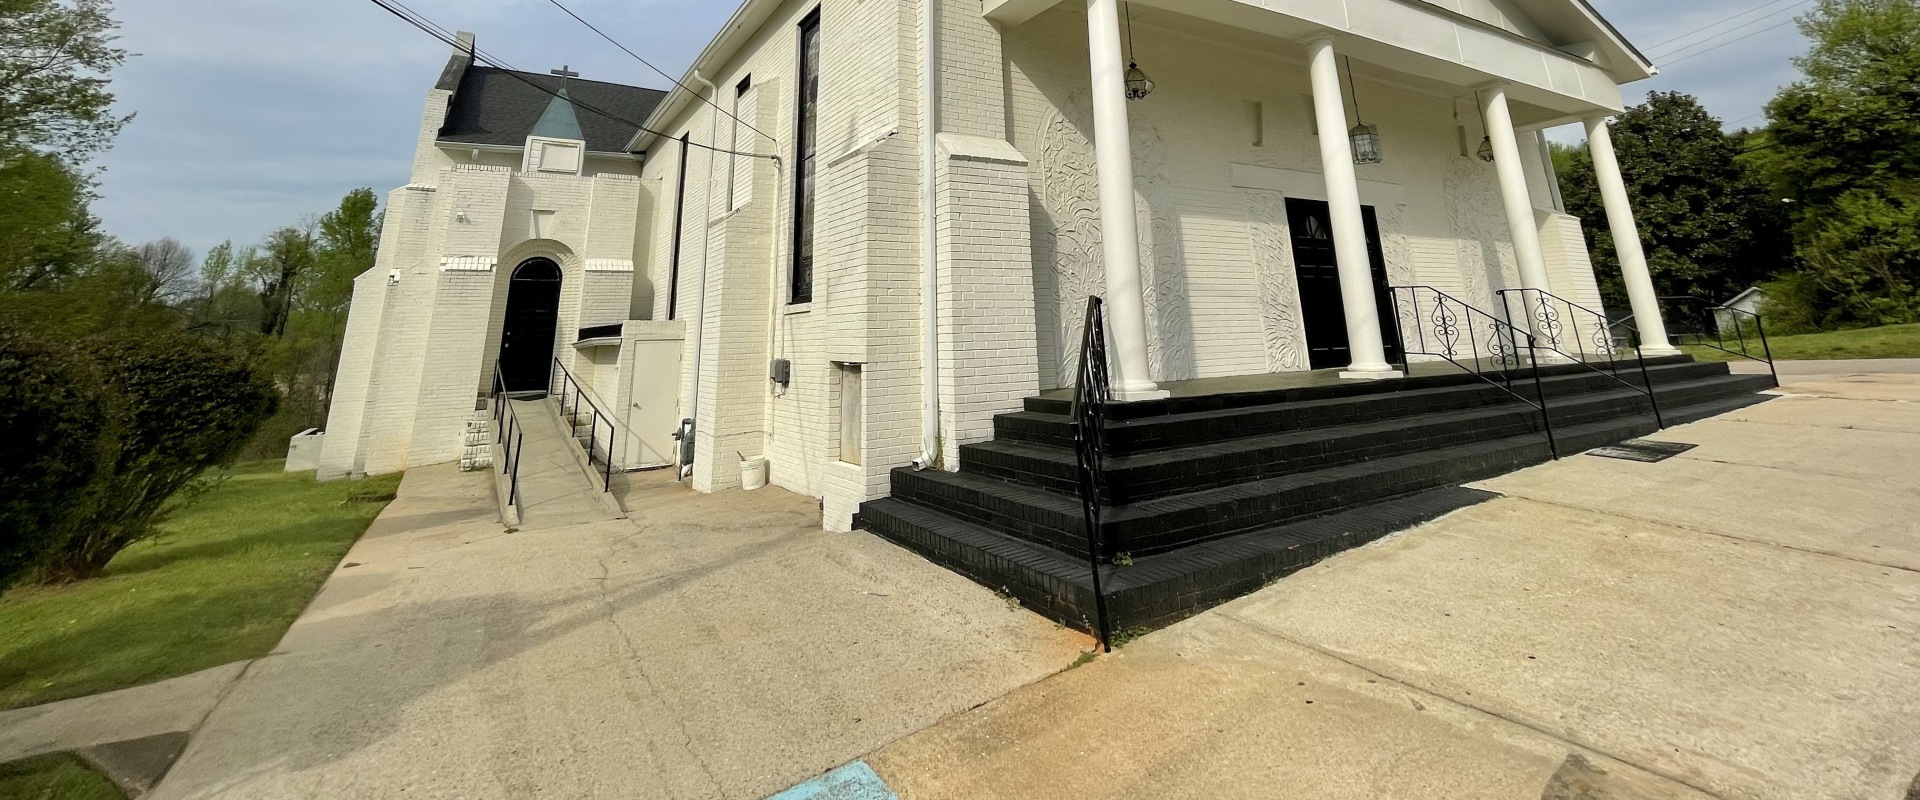 The Process of Establishing a New Church in Upstate South Carolina